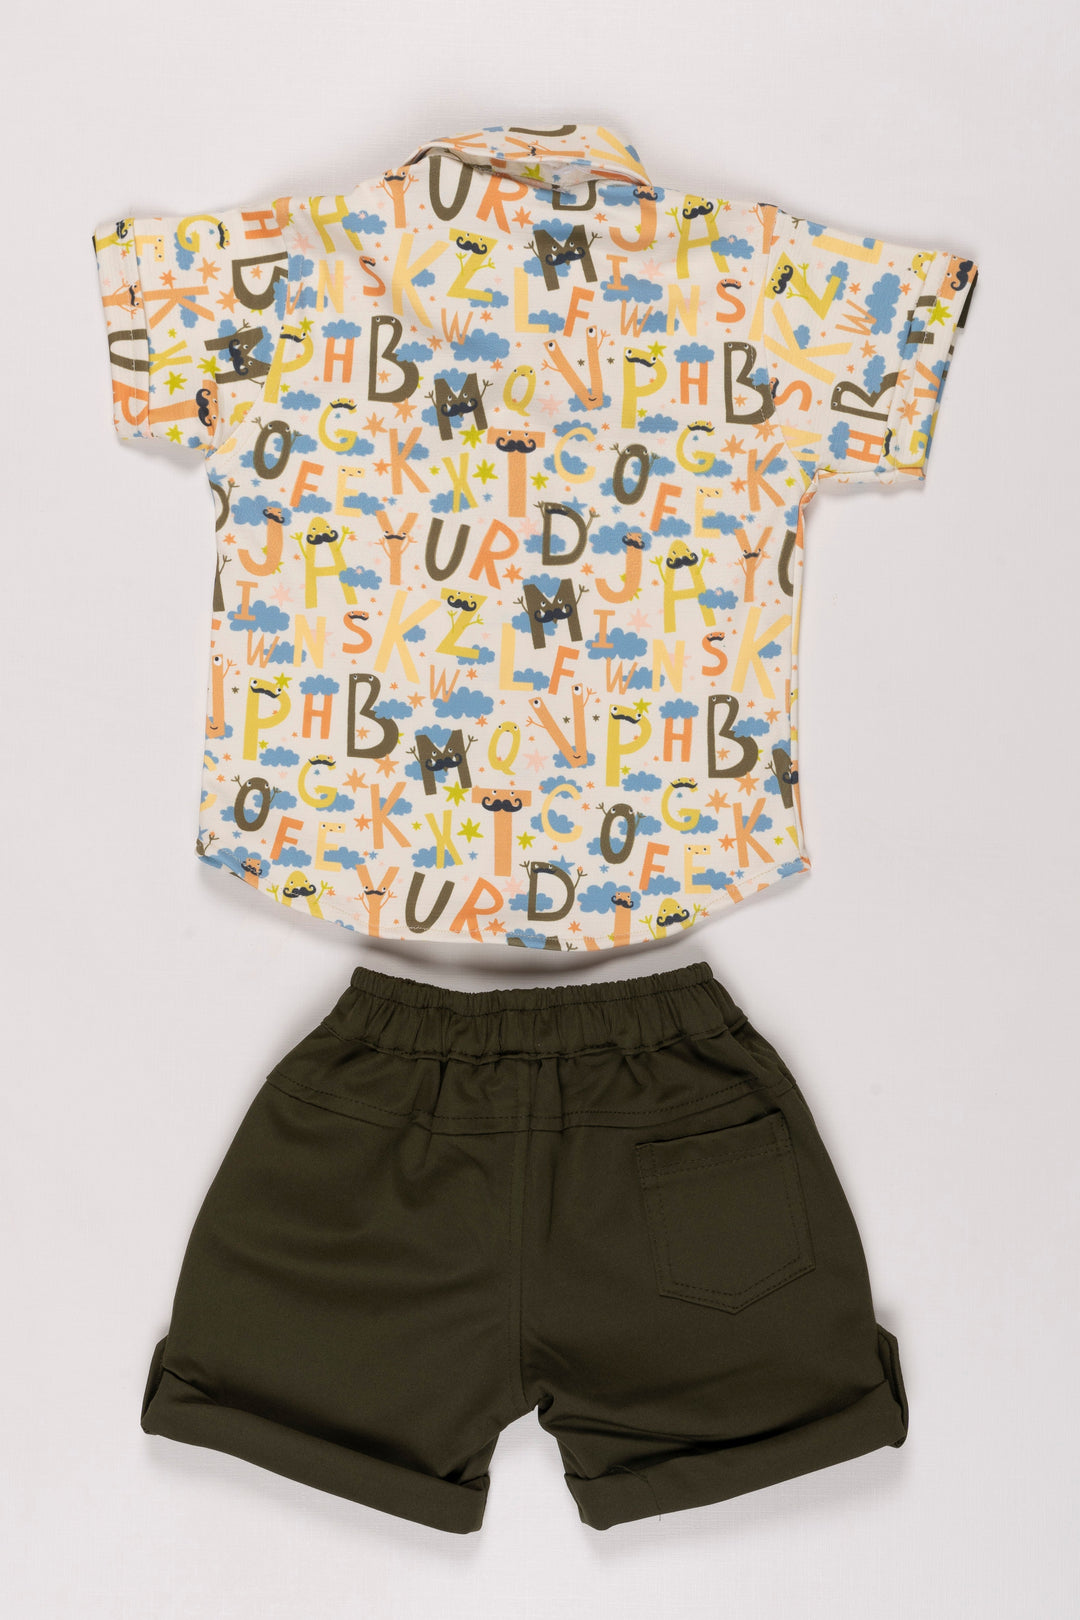 The Nesavu Boys Casual Set Alphabet Print Boys Casual Shirt & Olive Shorts Set - Trendy Summer Playwear Nesavu Boys Casual Alphabet Shirt with Olive Shorts Set | Stylish Kids' Summer Outfits | The Nesavu